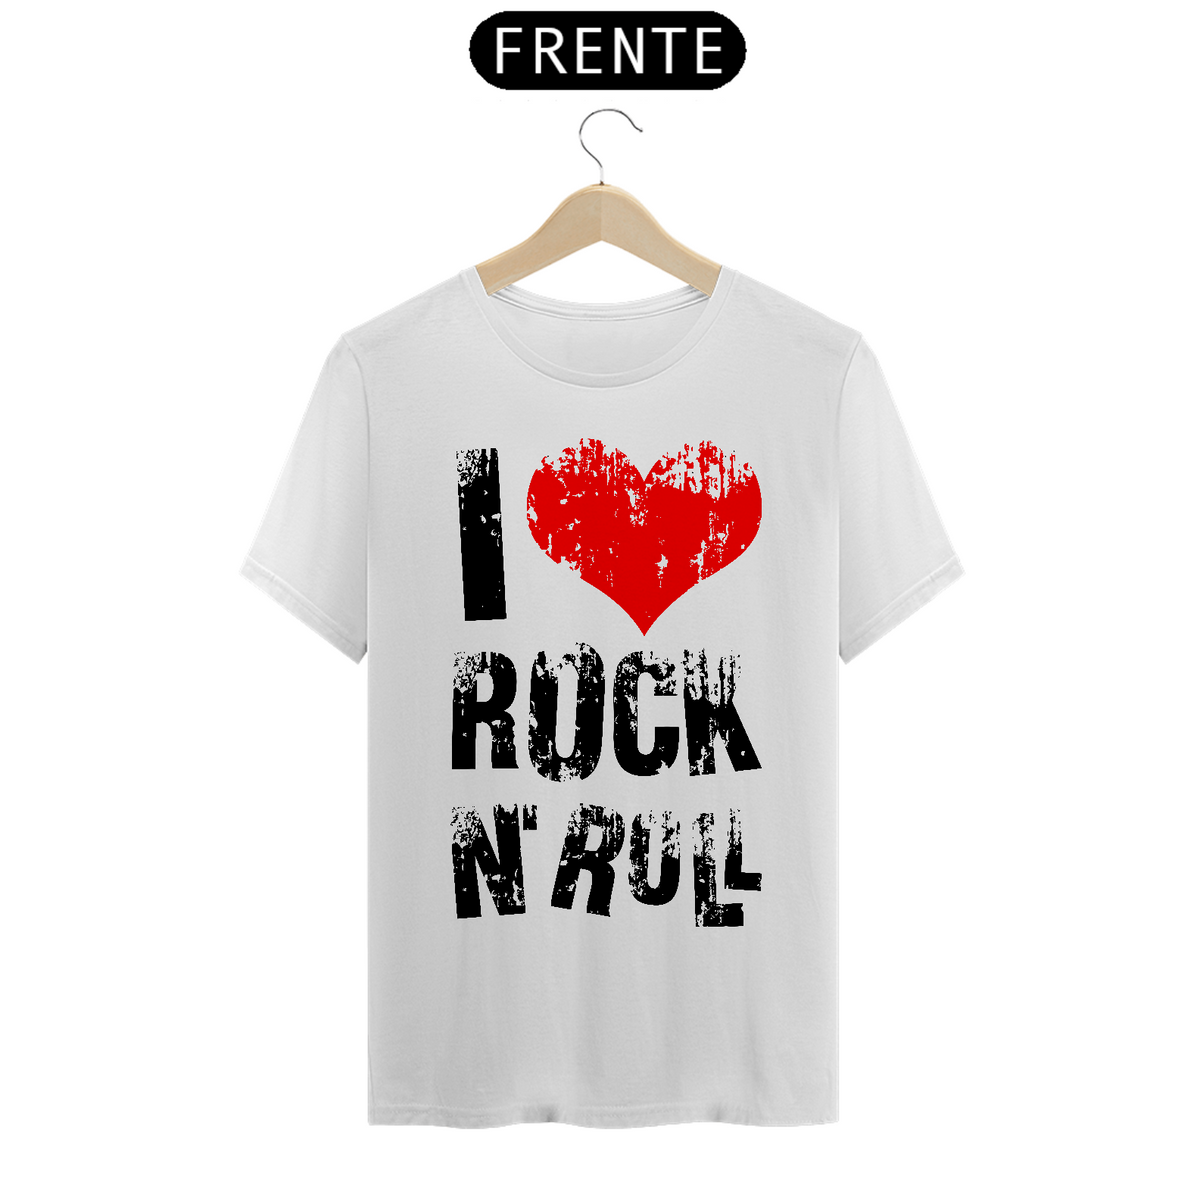 Nome do produto: I Love Rock- tshirt